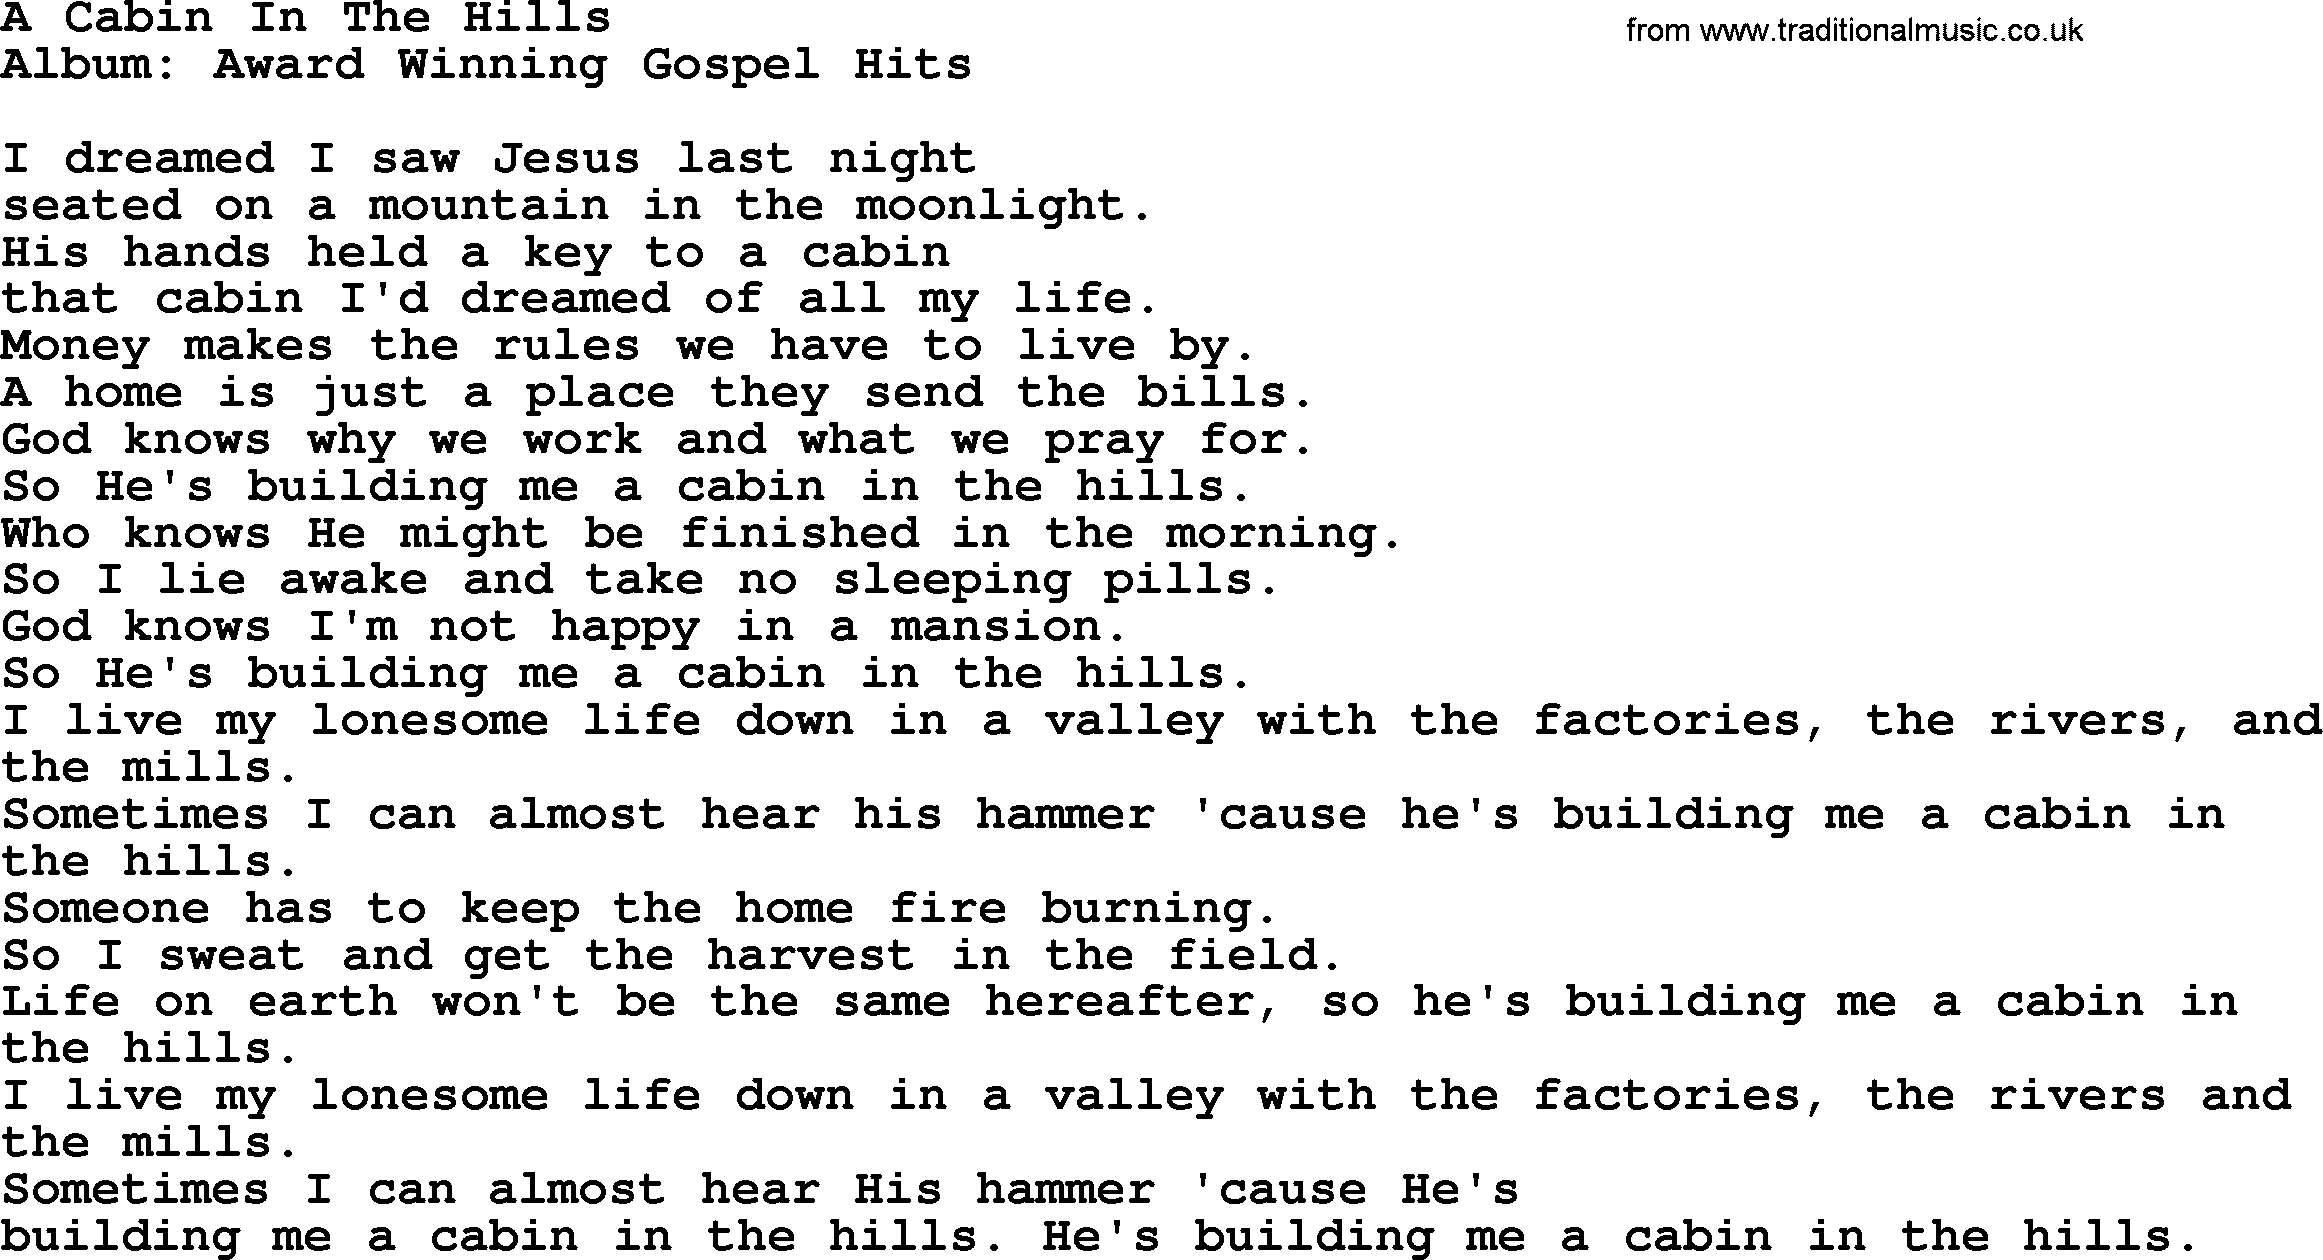 Merle Haggard song: A Cabin In The Hills, lyrics.